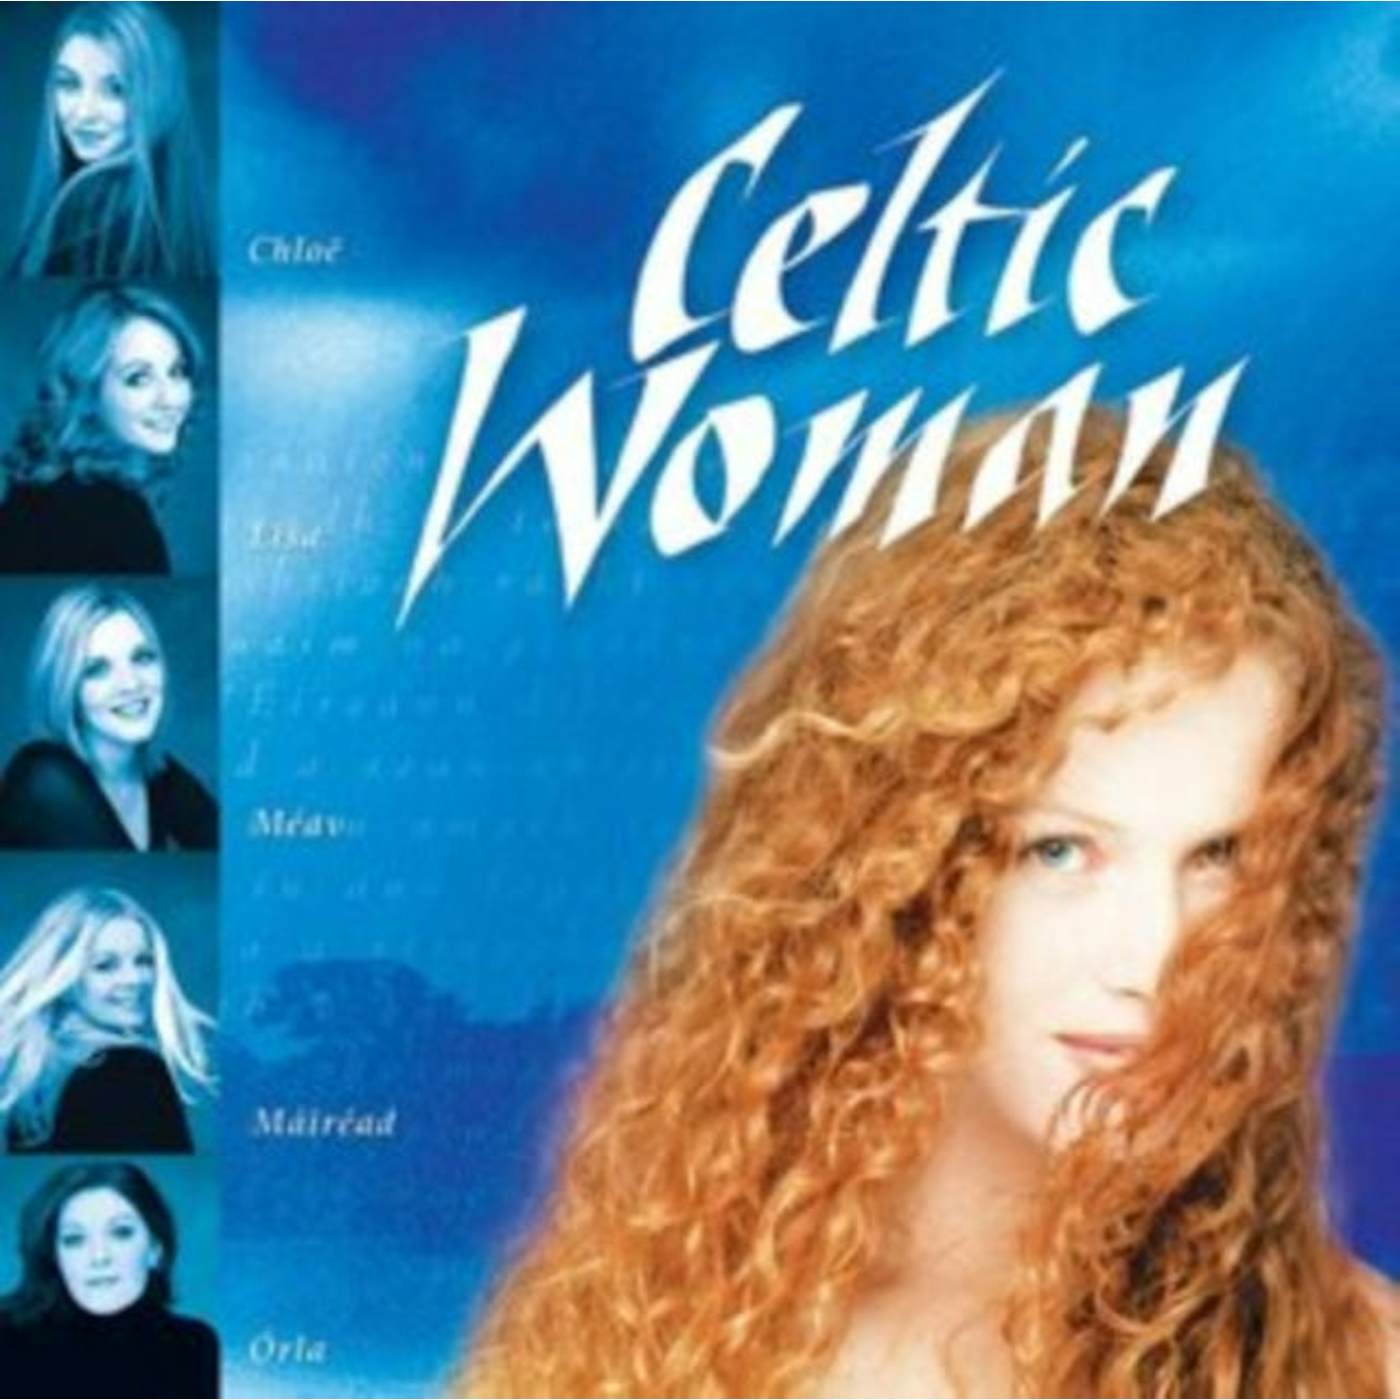 Celtic Woman CD - Celtic Woman